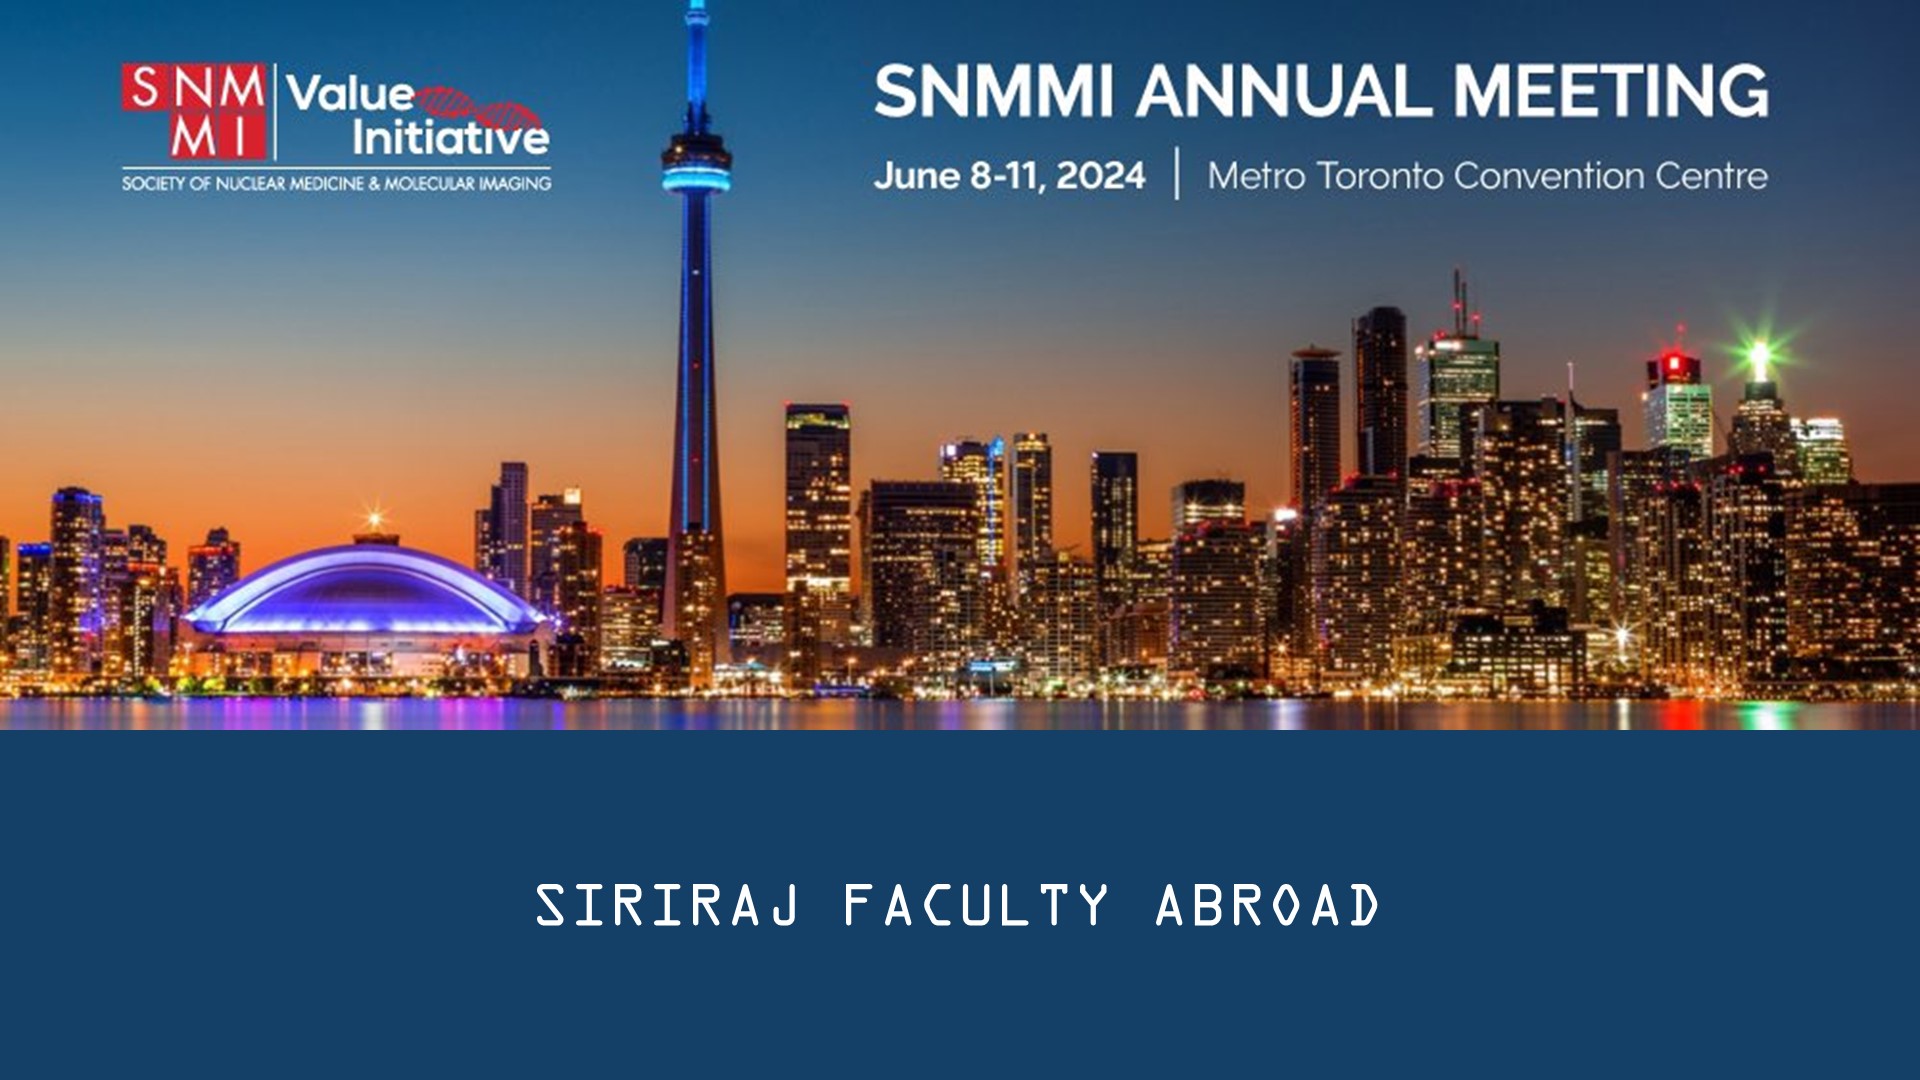 Siriraj Faculty Abroad at SNMMI 2024 in Canada